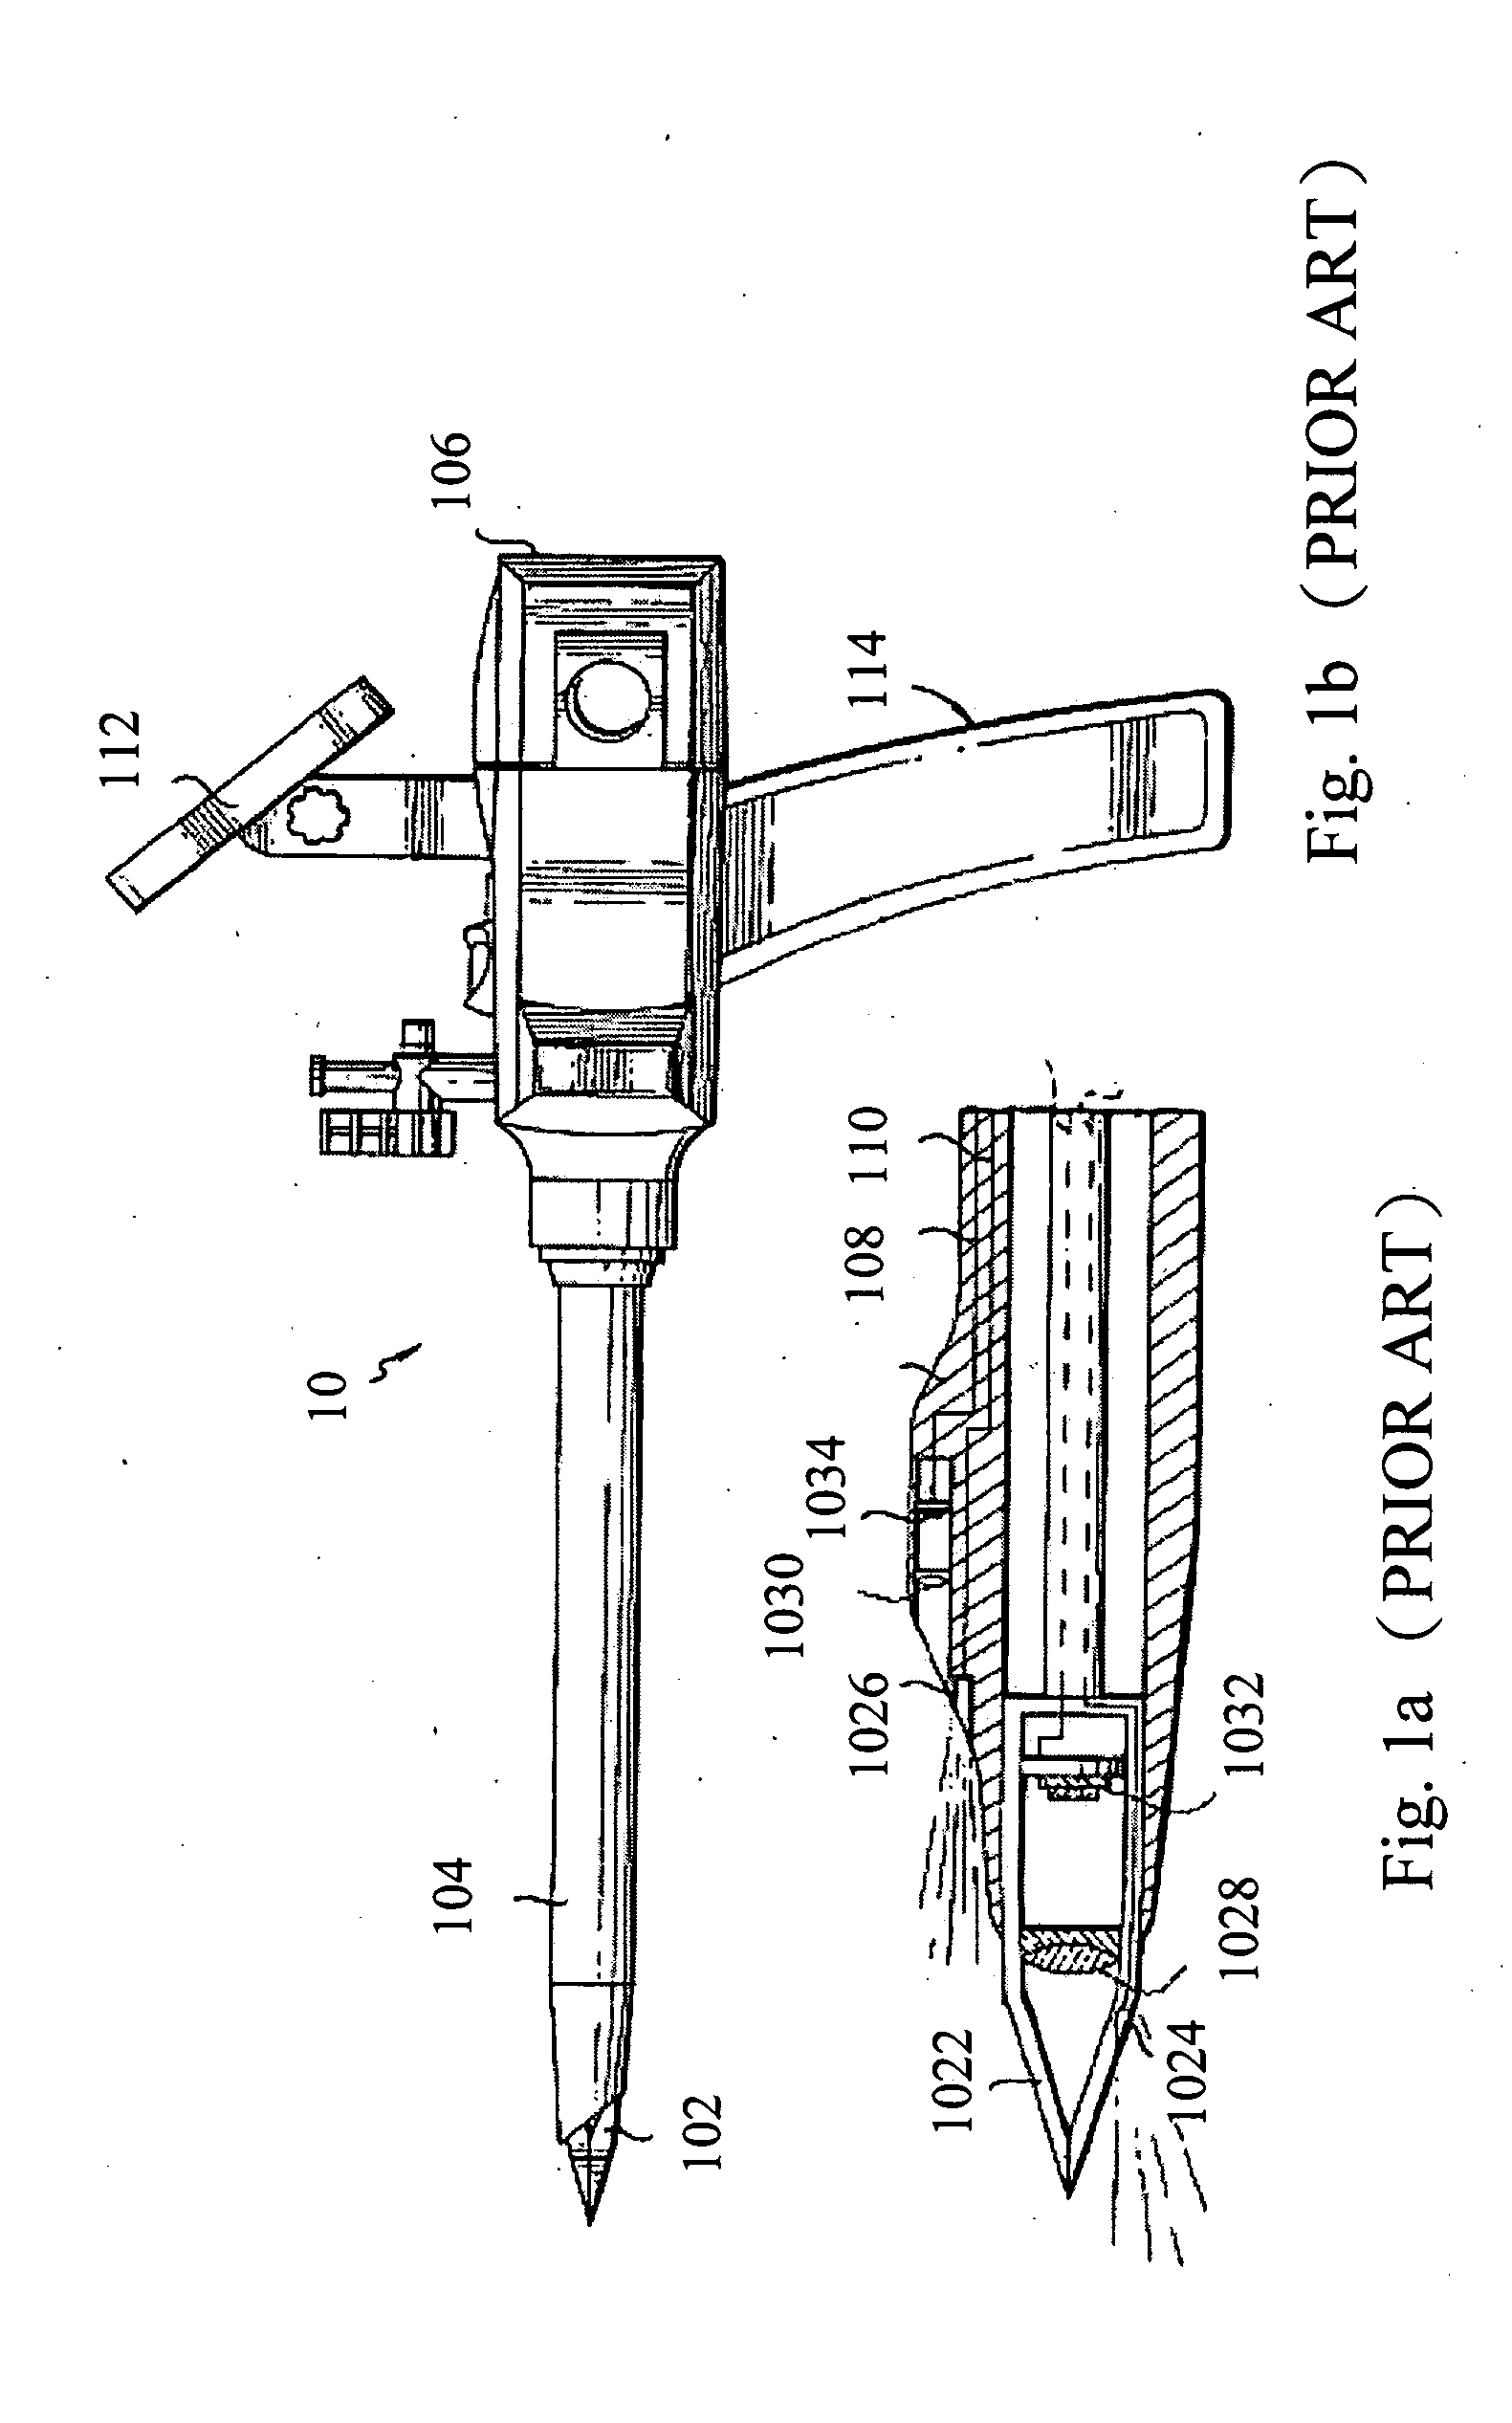 Image-type intubation-aiding device